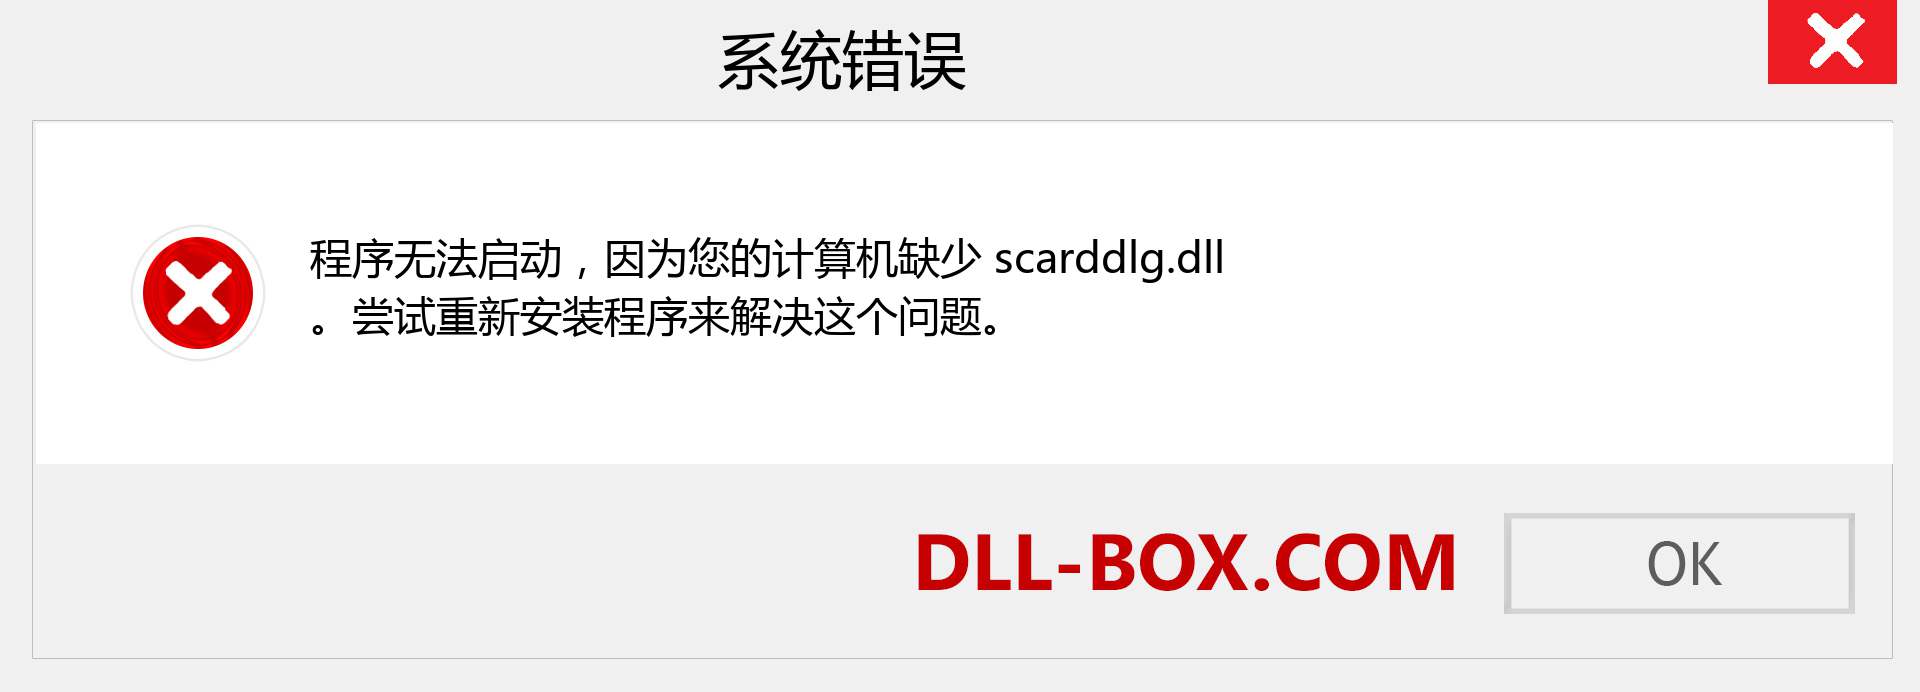 scarddlg.dll 文件丢失？。 适用于 Windows 7、8、10 的下载 - 修复 Windows、照片、图像上的 scarddlg dll 丢失错误